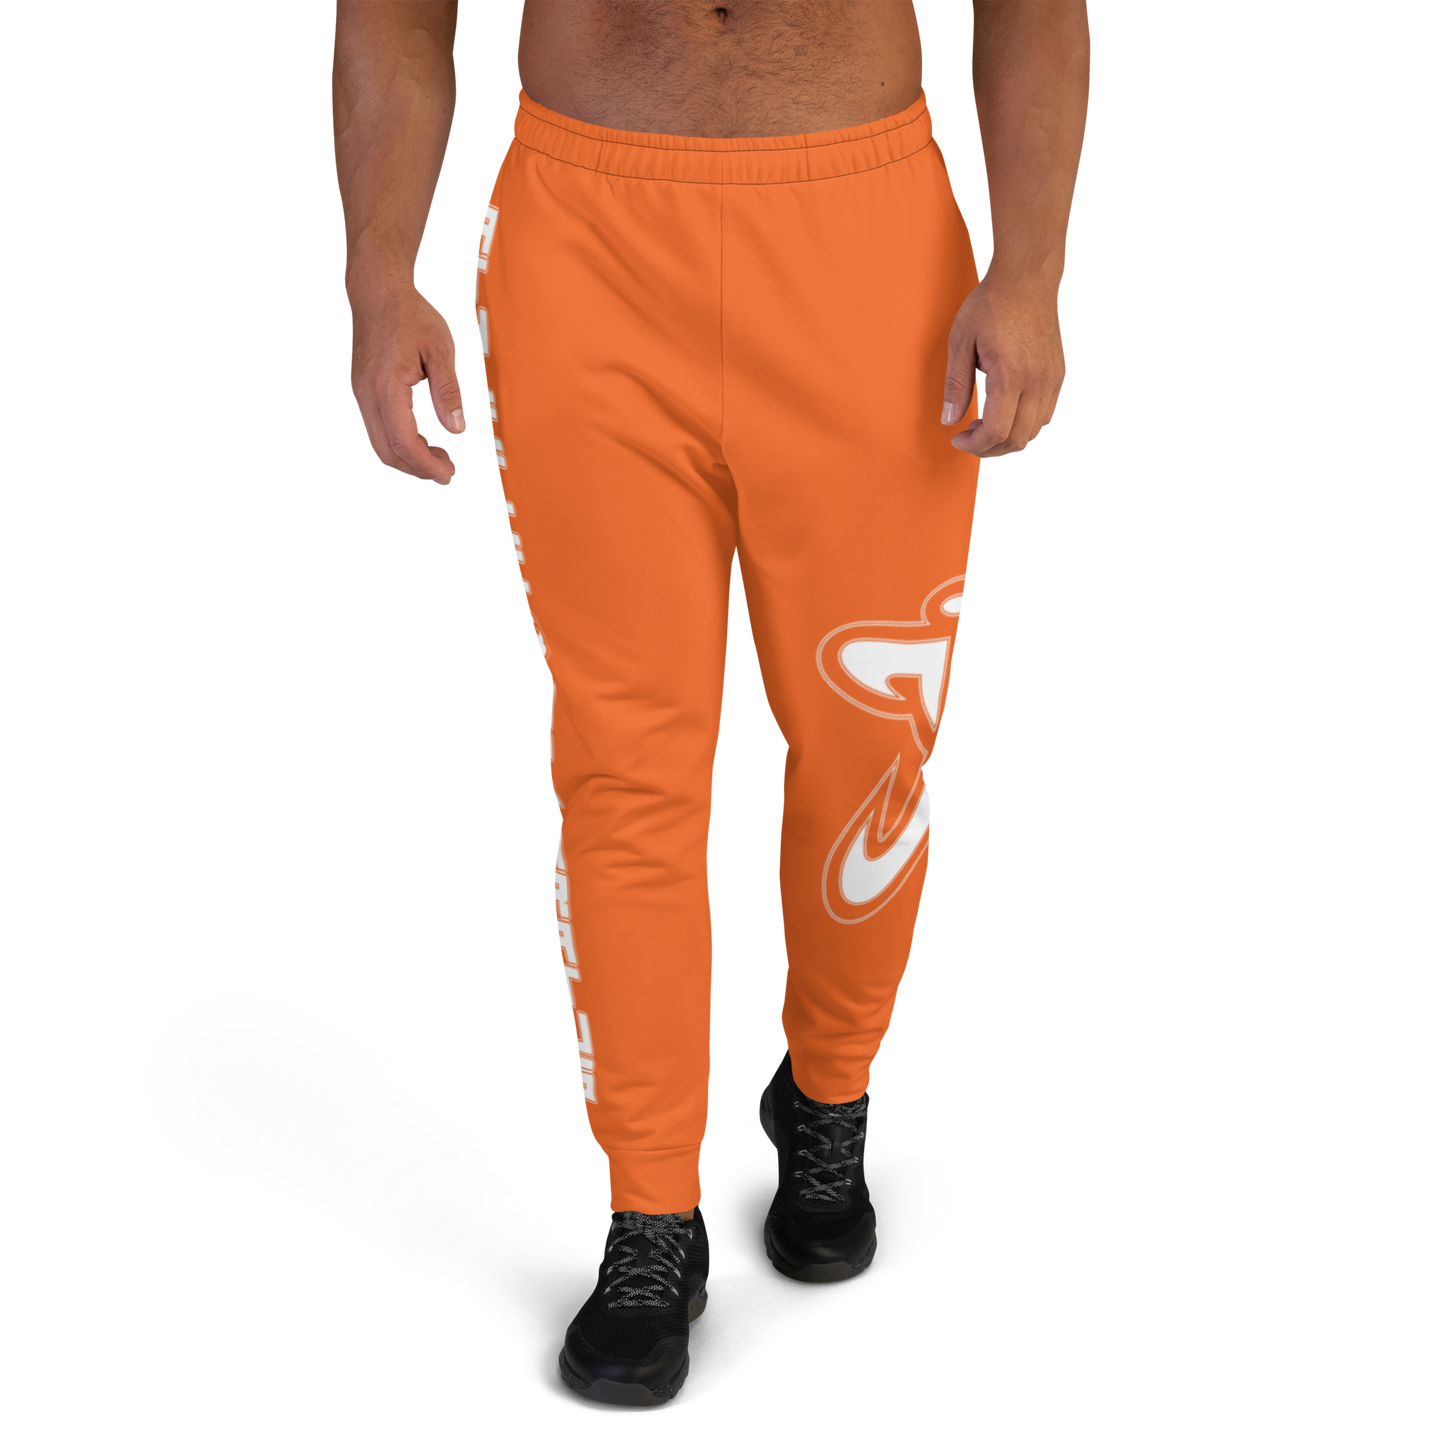 Athletic Apparatus Orange White Logo V2 Men's Joggers